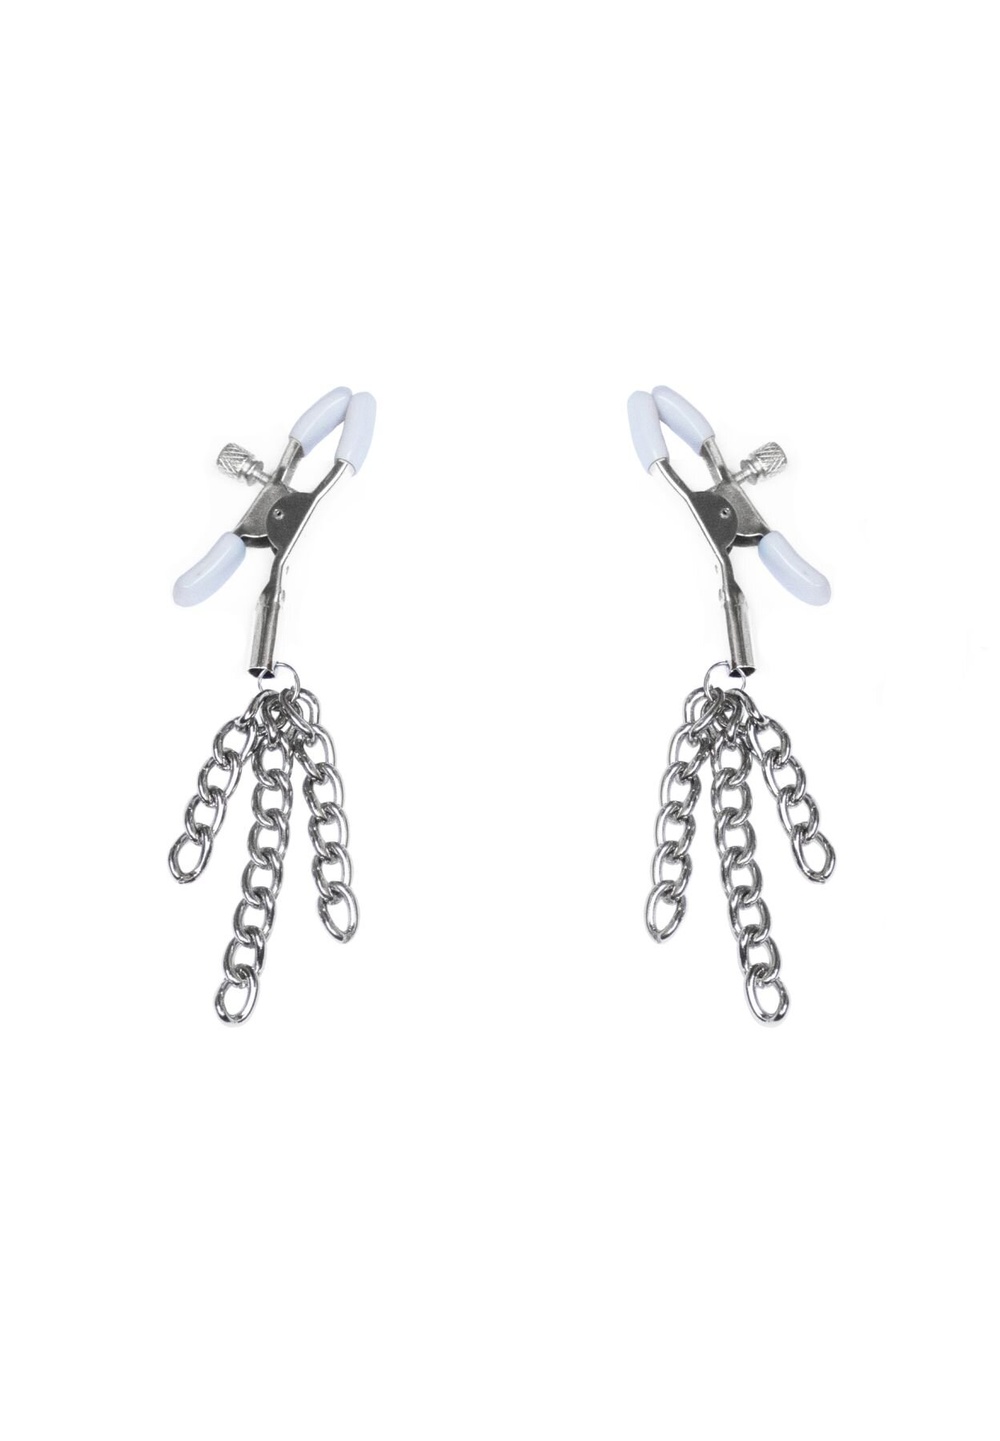 Зажимы для сосков с кисточками Feral Feelings - Nipple clamps Tassels, серебро/белый фото